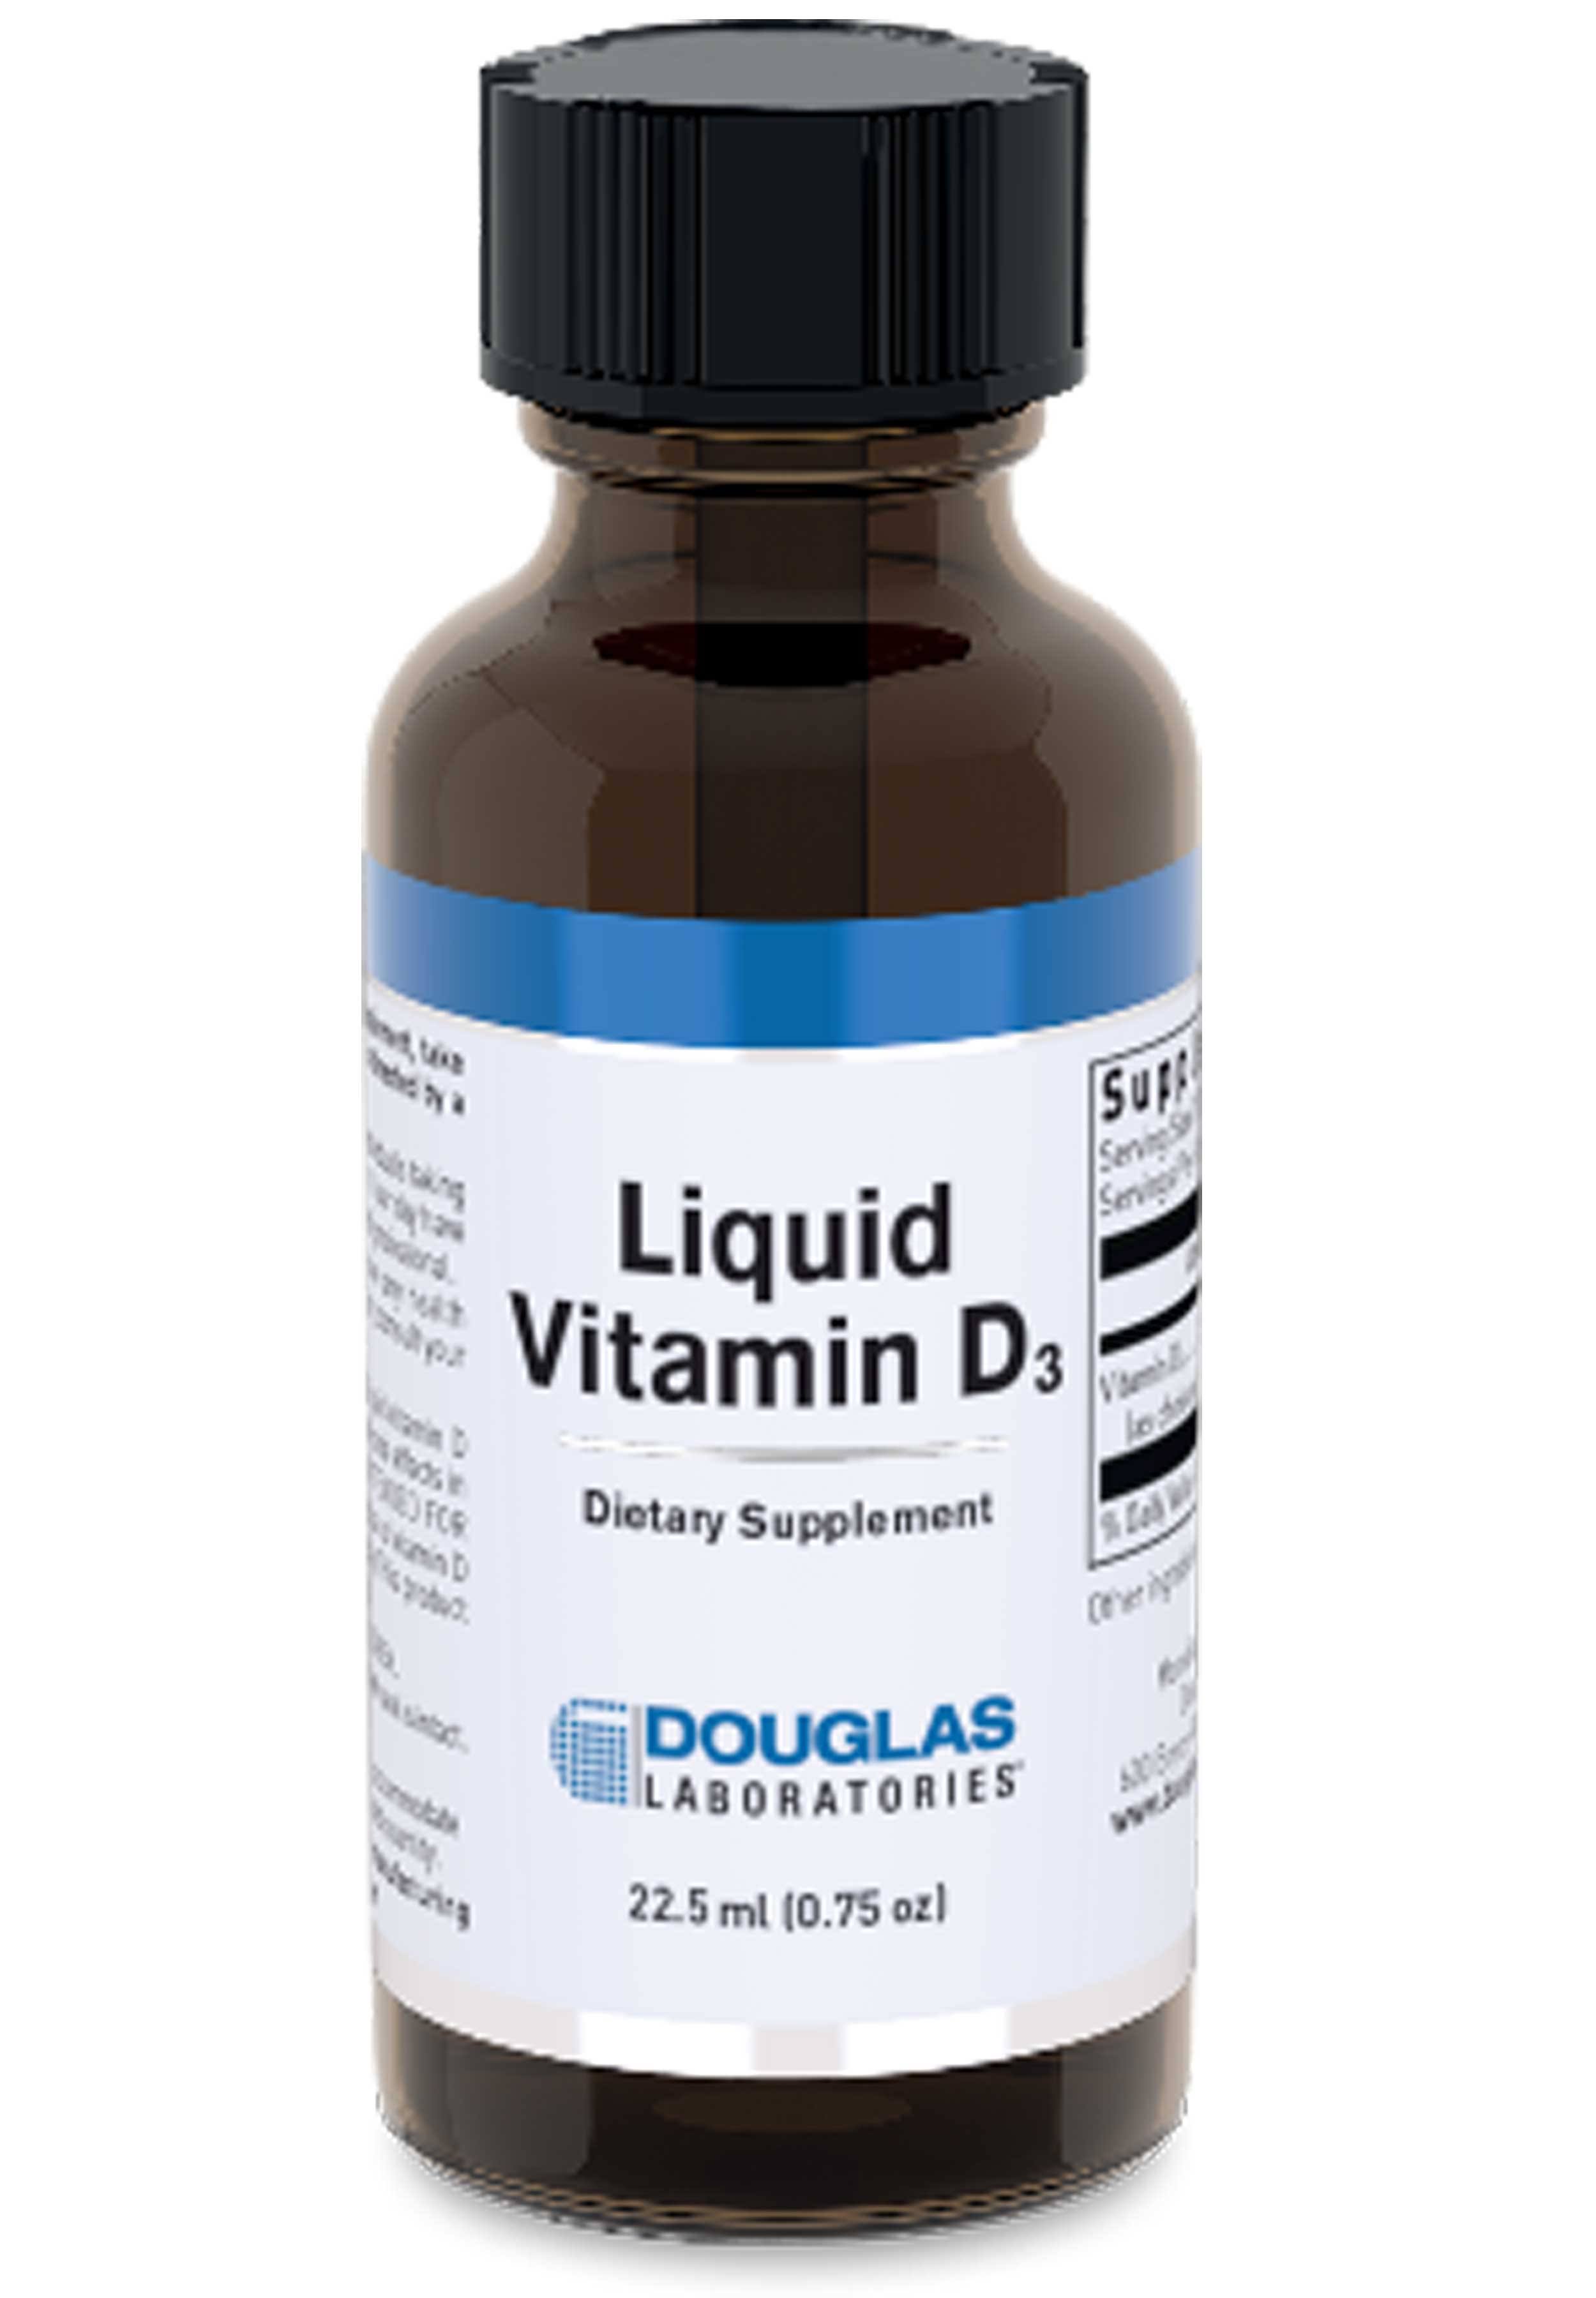 Douglas Laboratories Liquid Vitamin D-3 - 0.75 oz (22.5 ml)